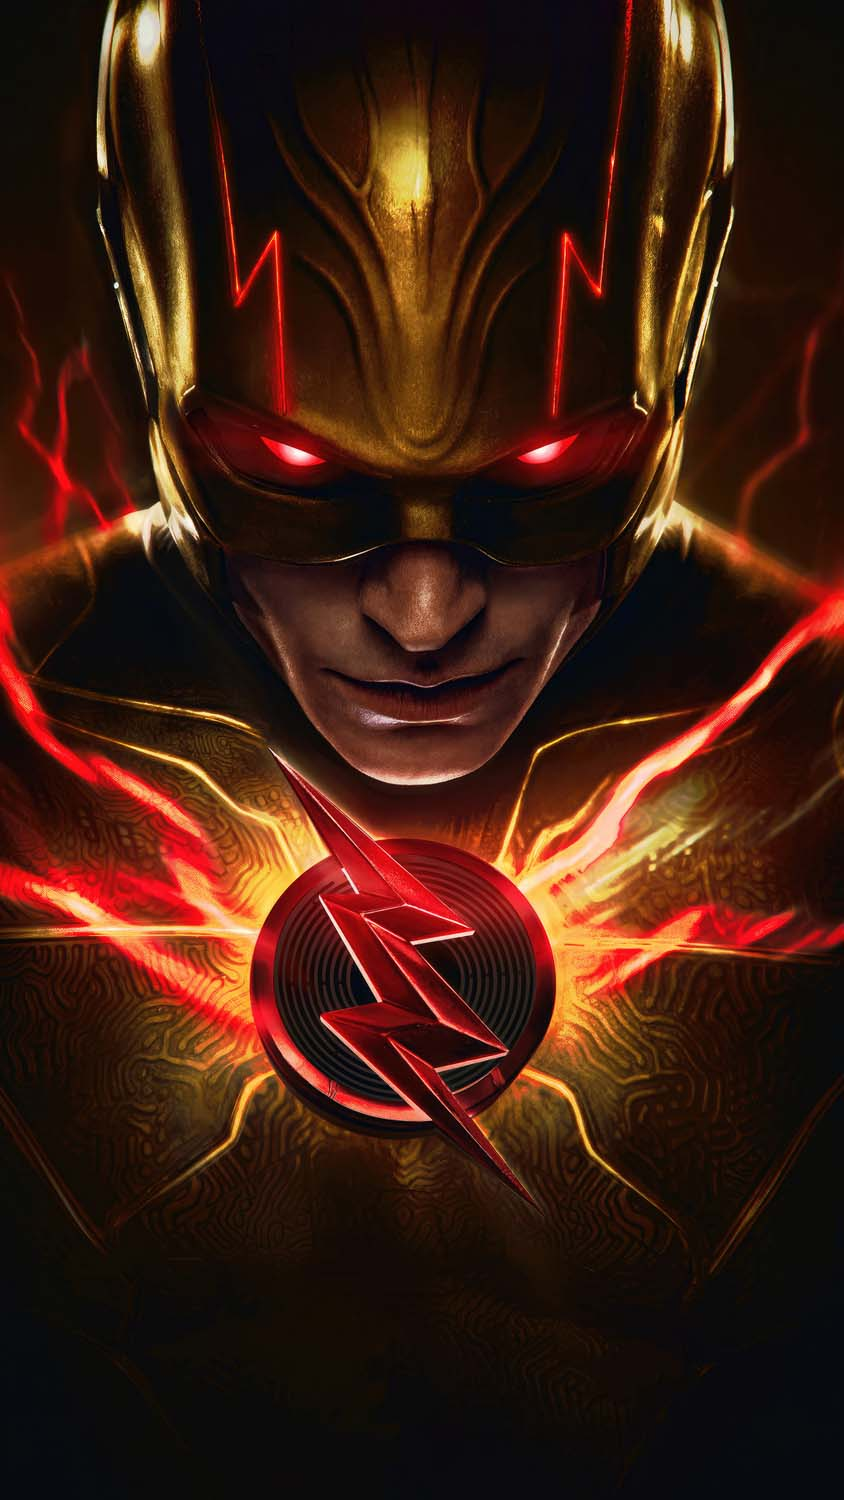 The flash coming 2K wallpaper download